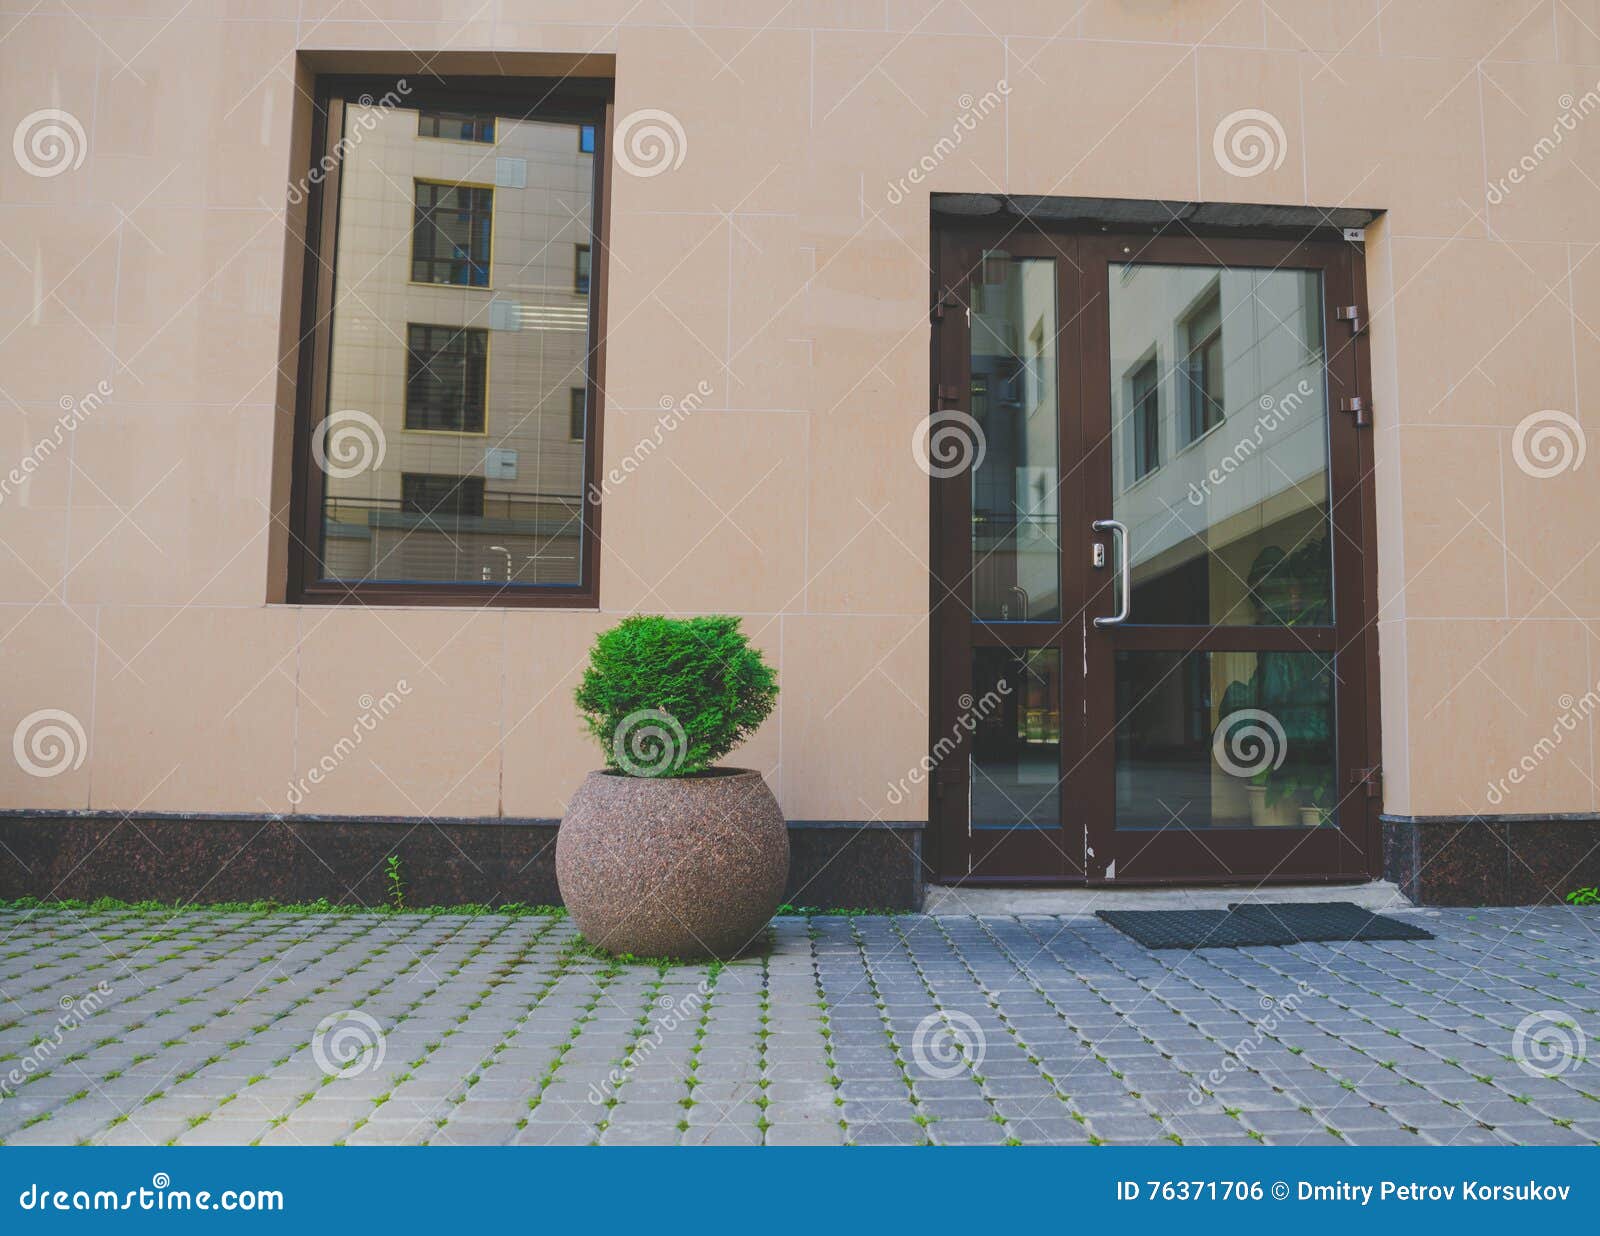 https://thumbs.dreamstime.com/z/main-entrance-inside-apartment-building-front-courtyard-glass-door-window-76371706.jpg